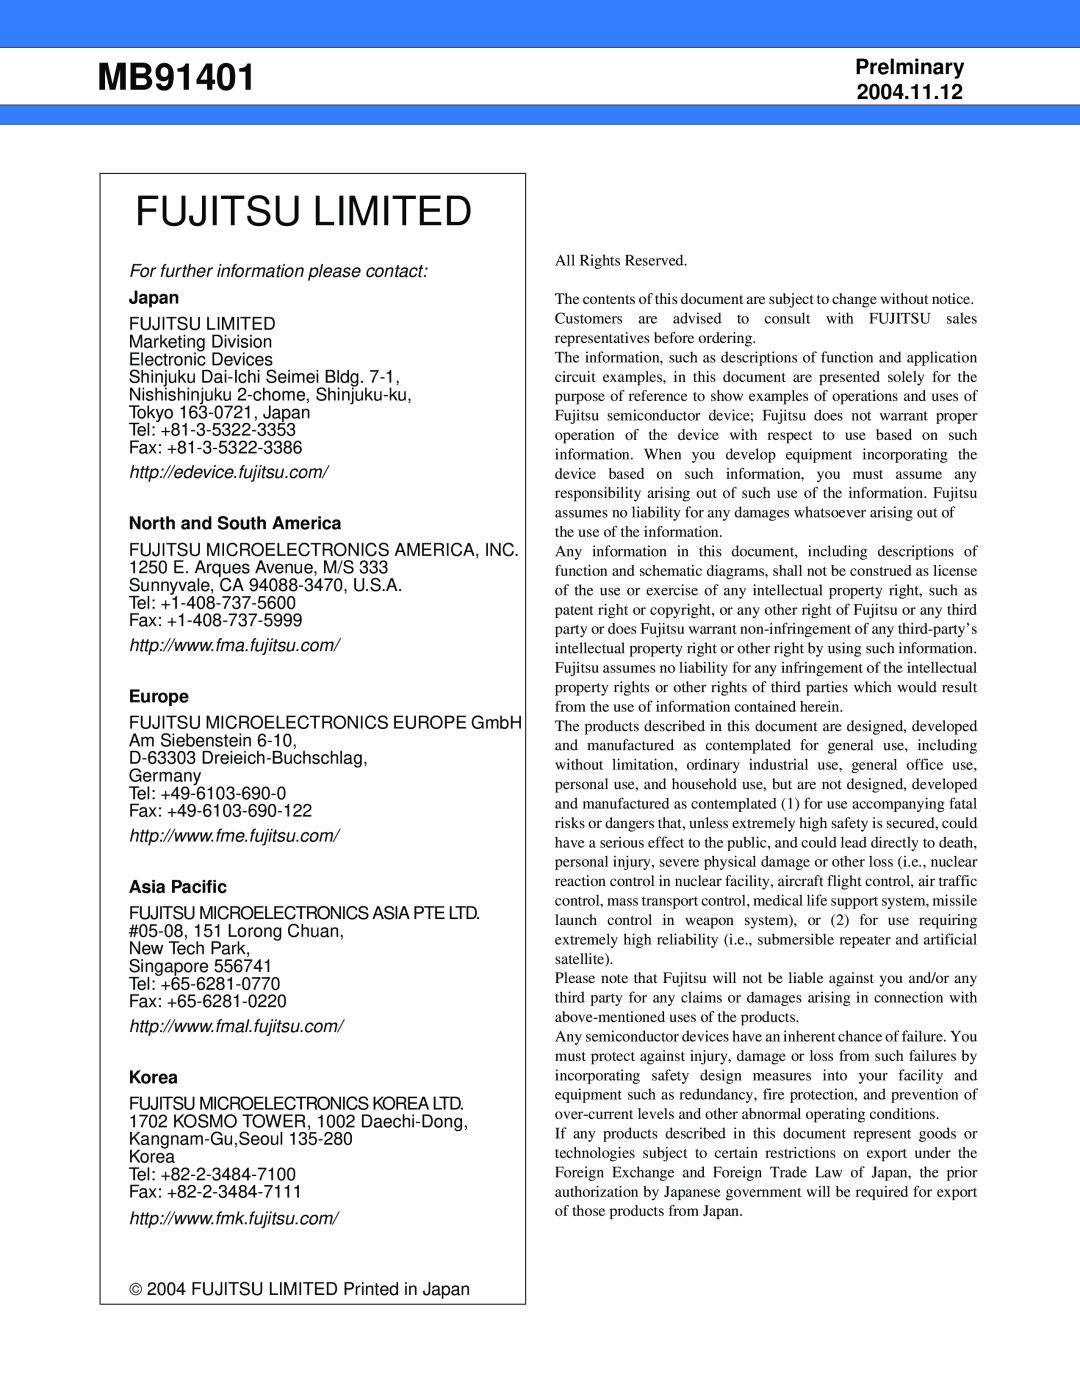 Fujitsu MB91401 manual Japan, North and South America, Europe, Asia Pacific, Korea, Fujitsu Limited, Prelminary, 2004.11.12 